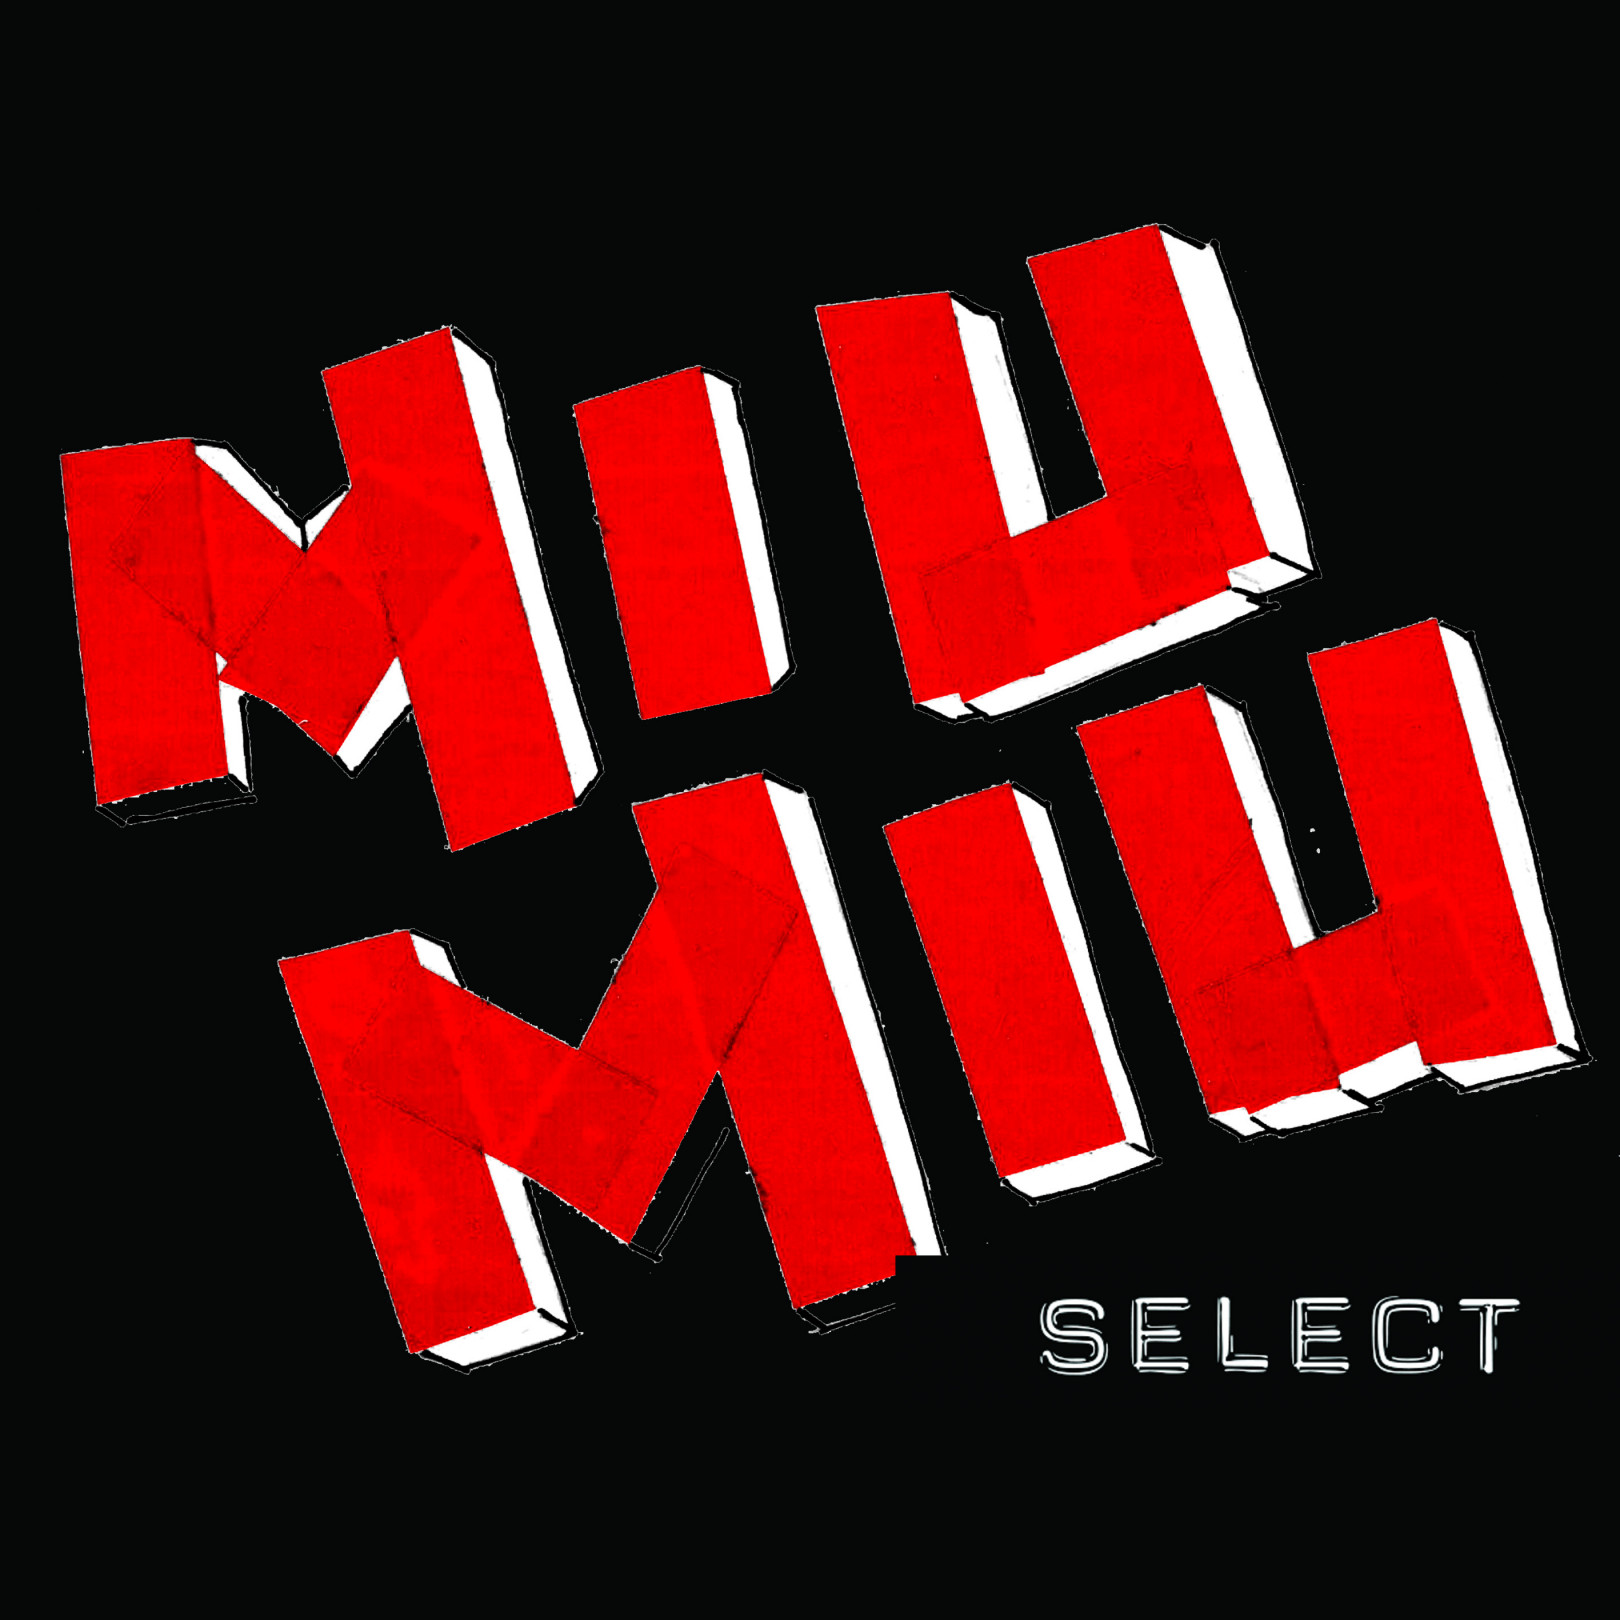 「Miu Miu Select by Alexa Chung」